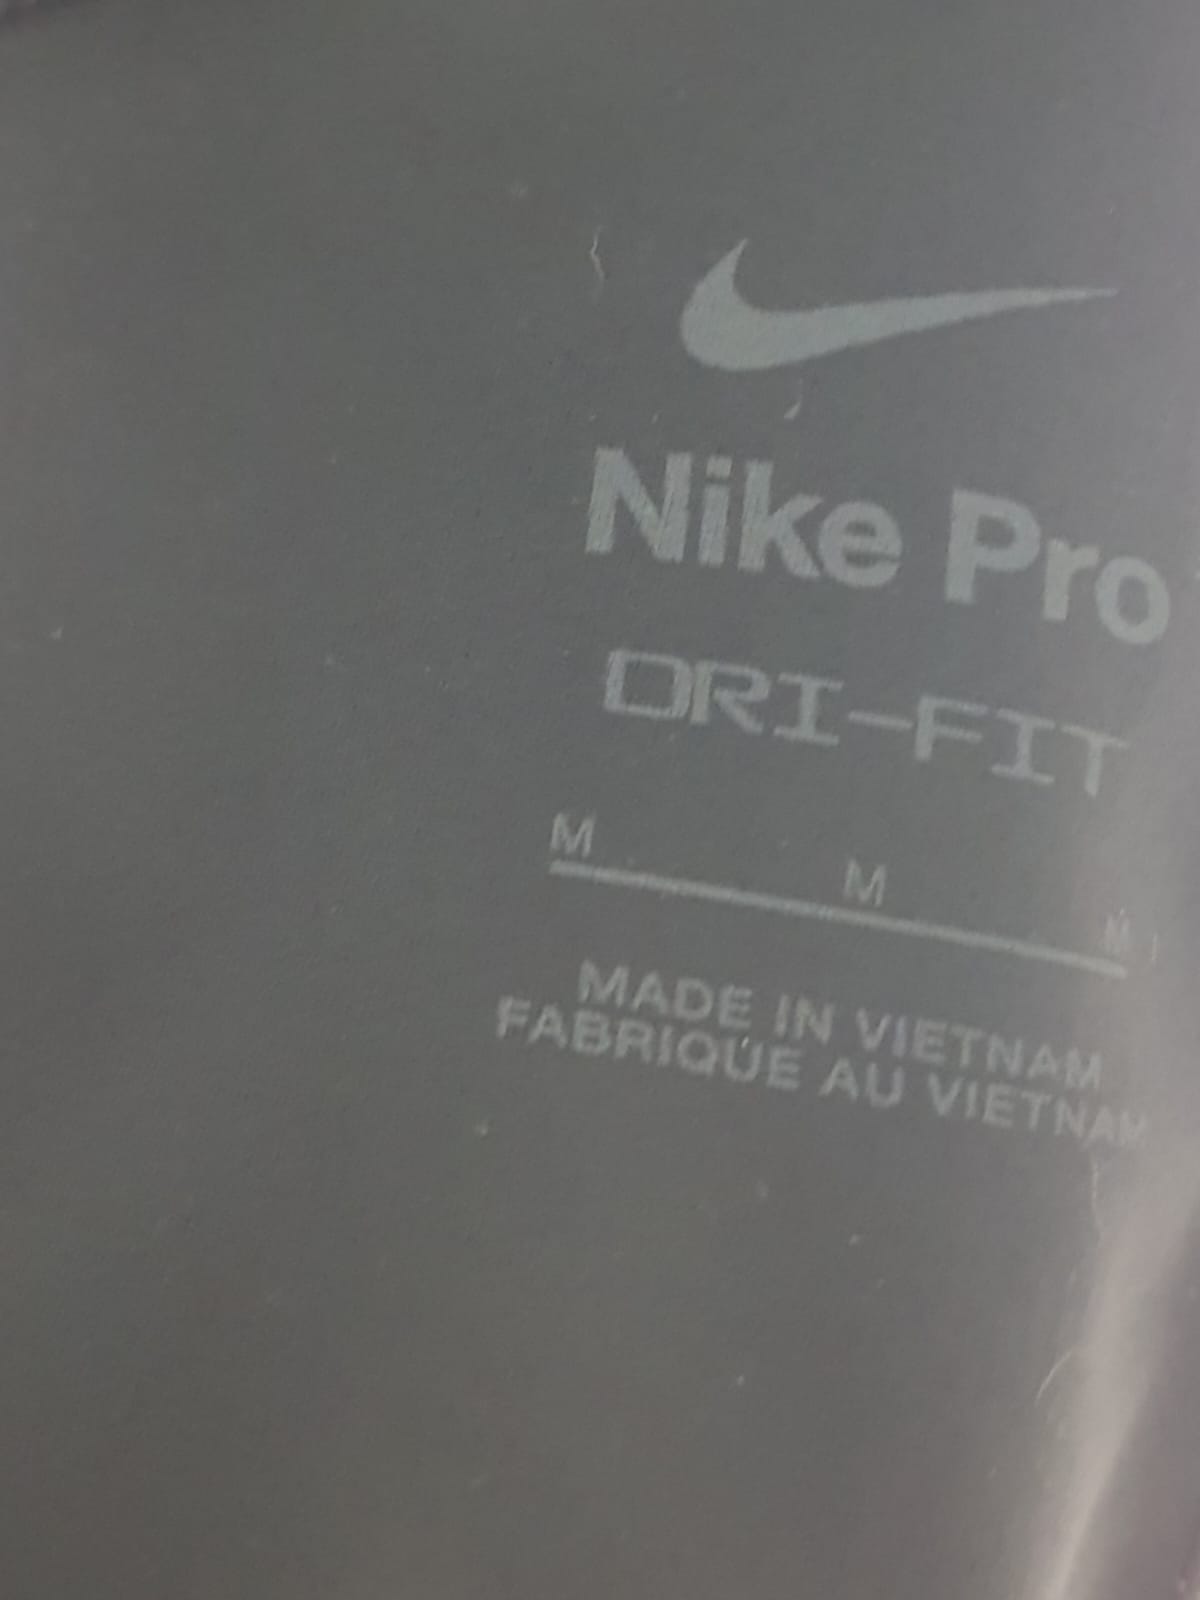 Nike Pro Dri-Fit Cyling Short ( M )